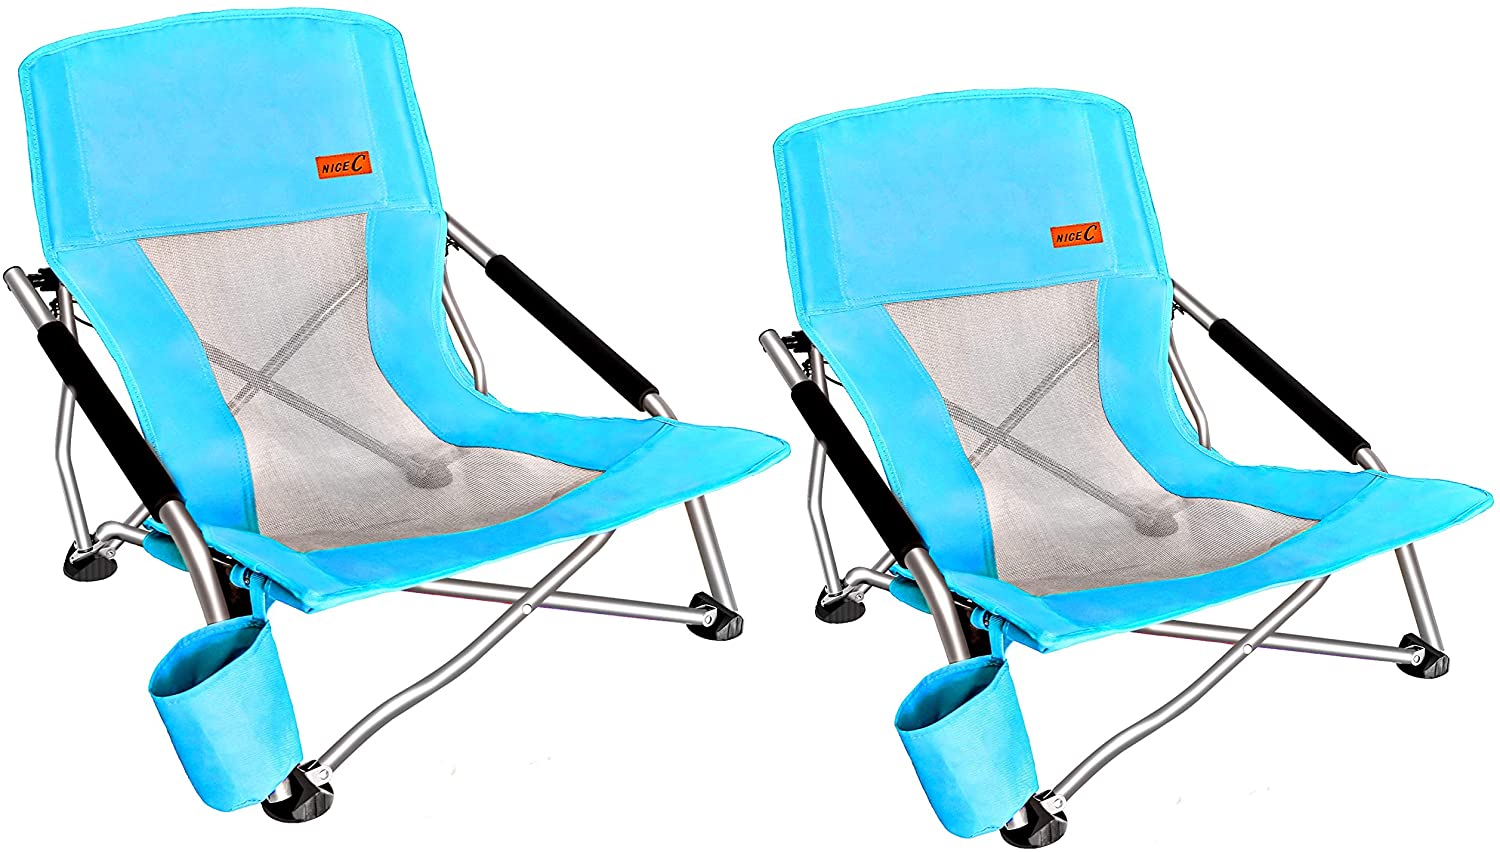 Nice C Portable Lightweight Beach Folding Chair, 2-Pack